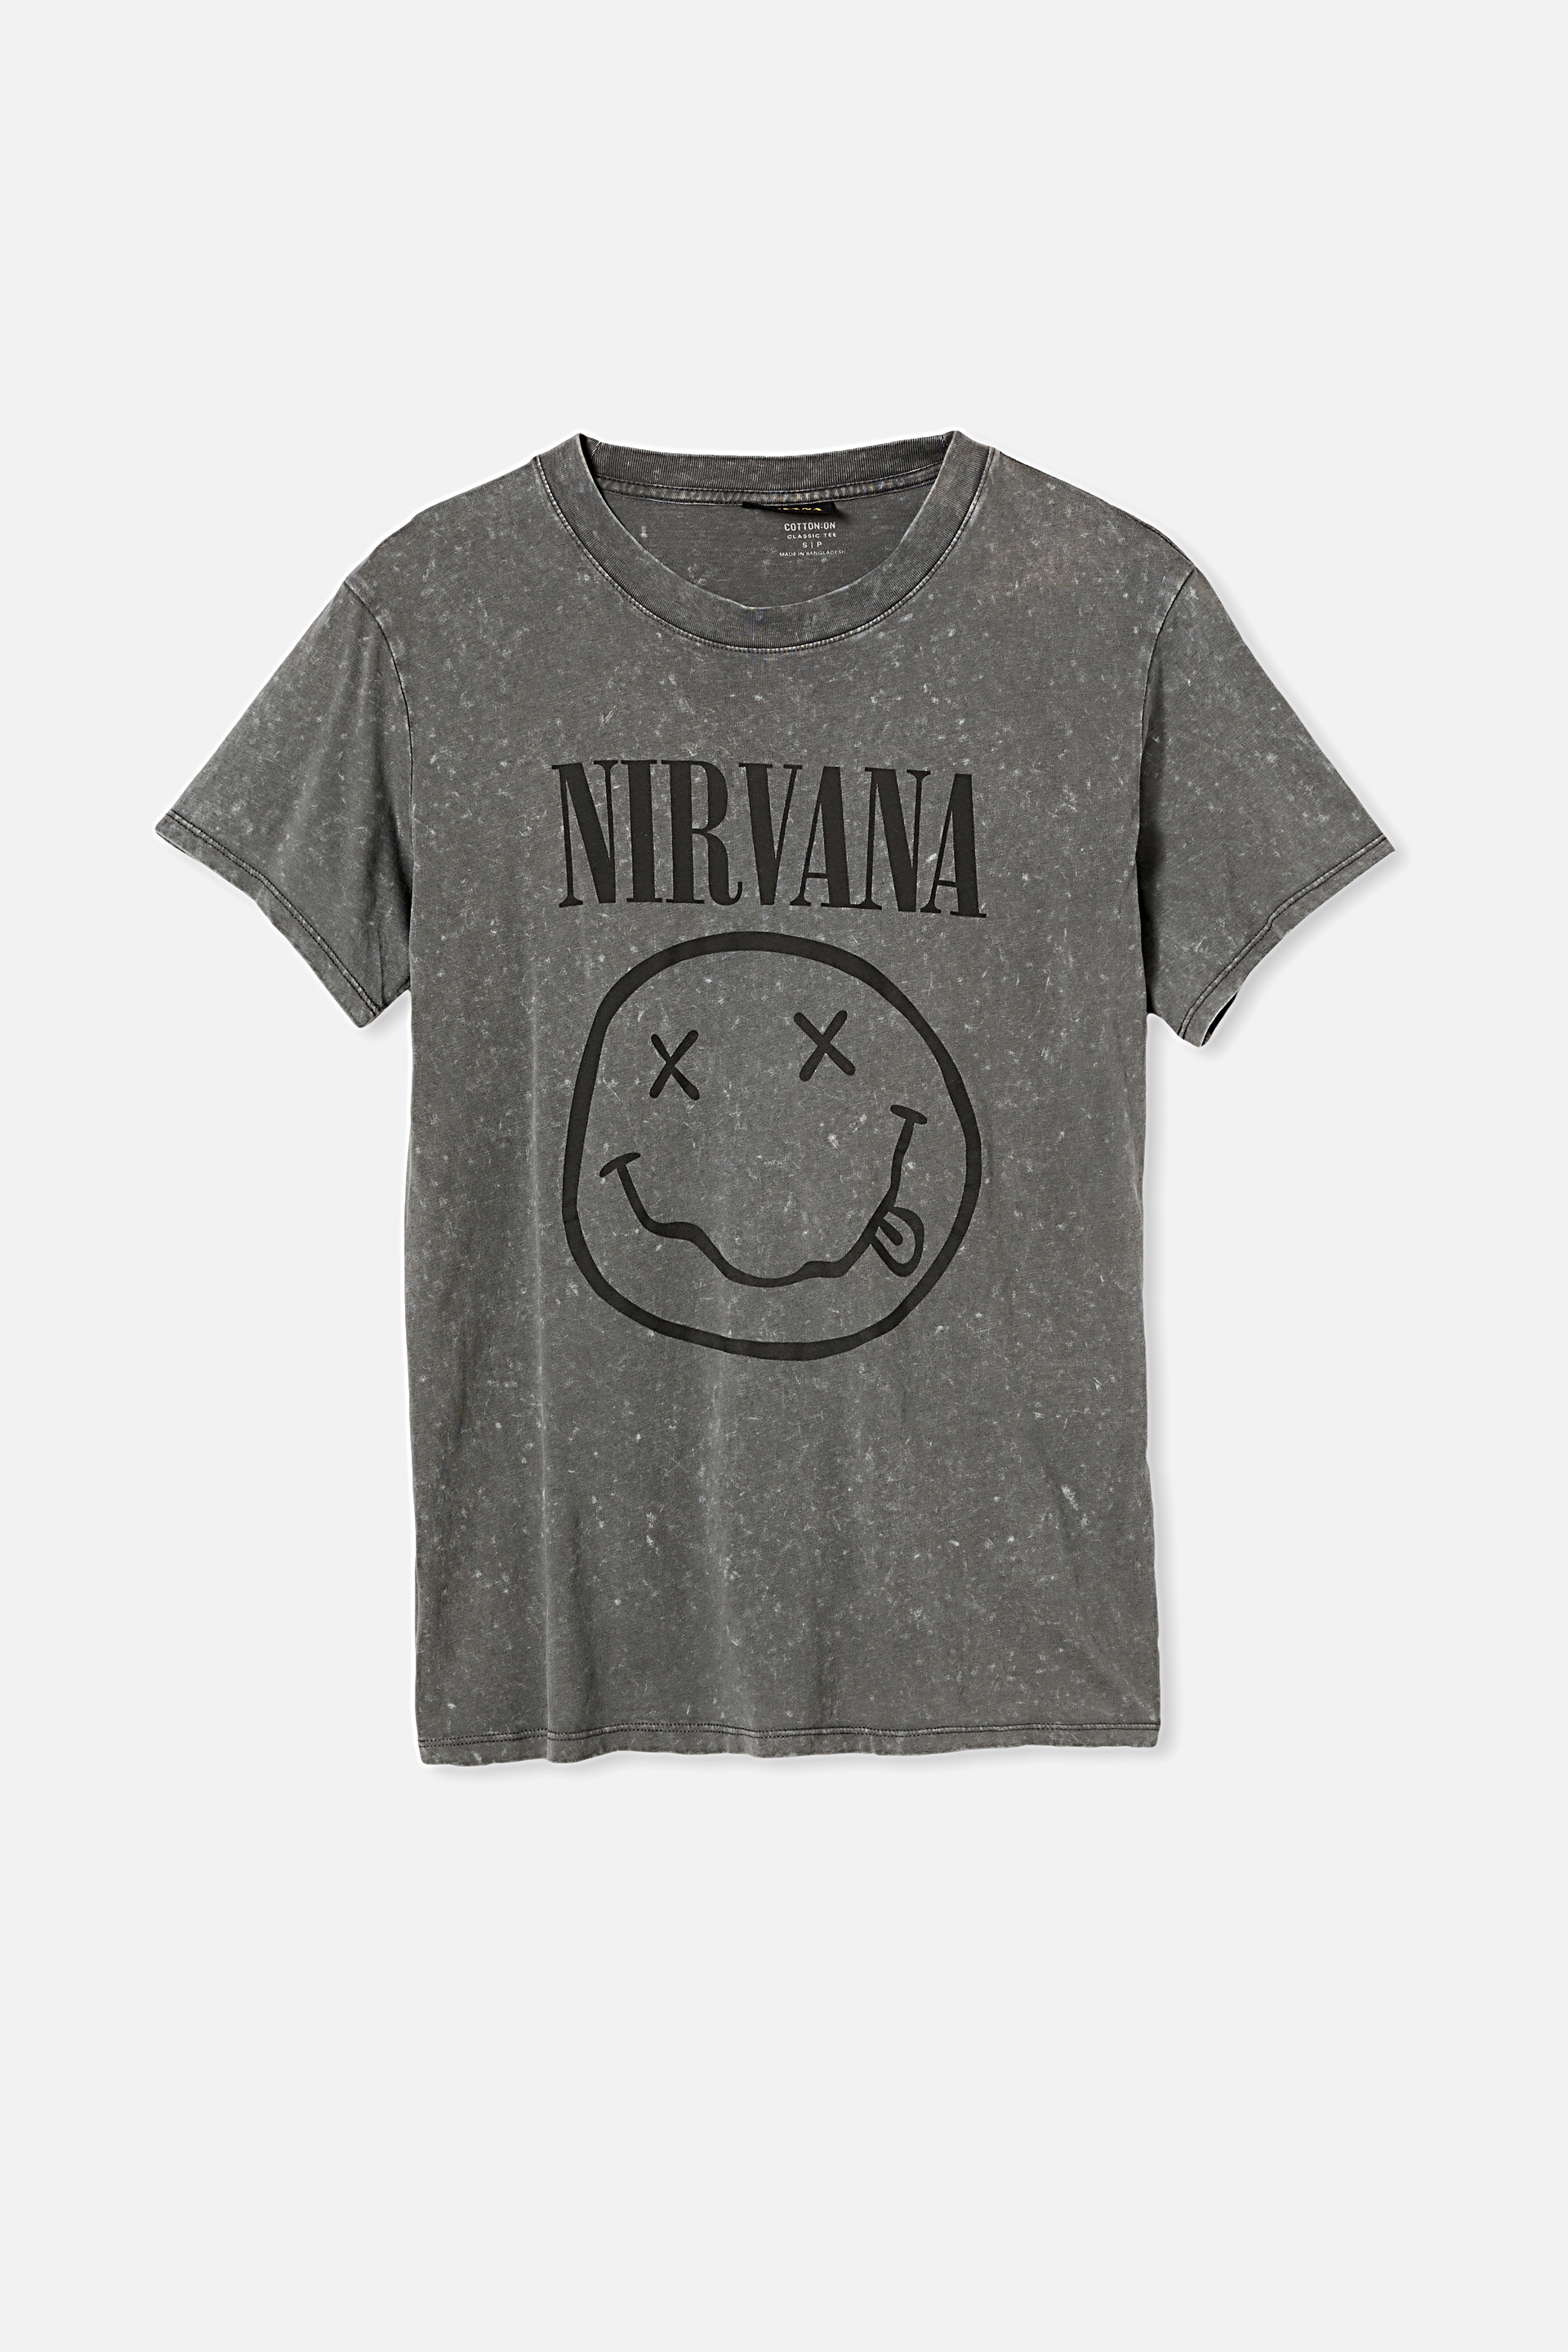 nirvana t shirt cotton on